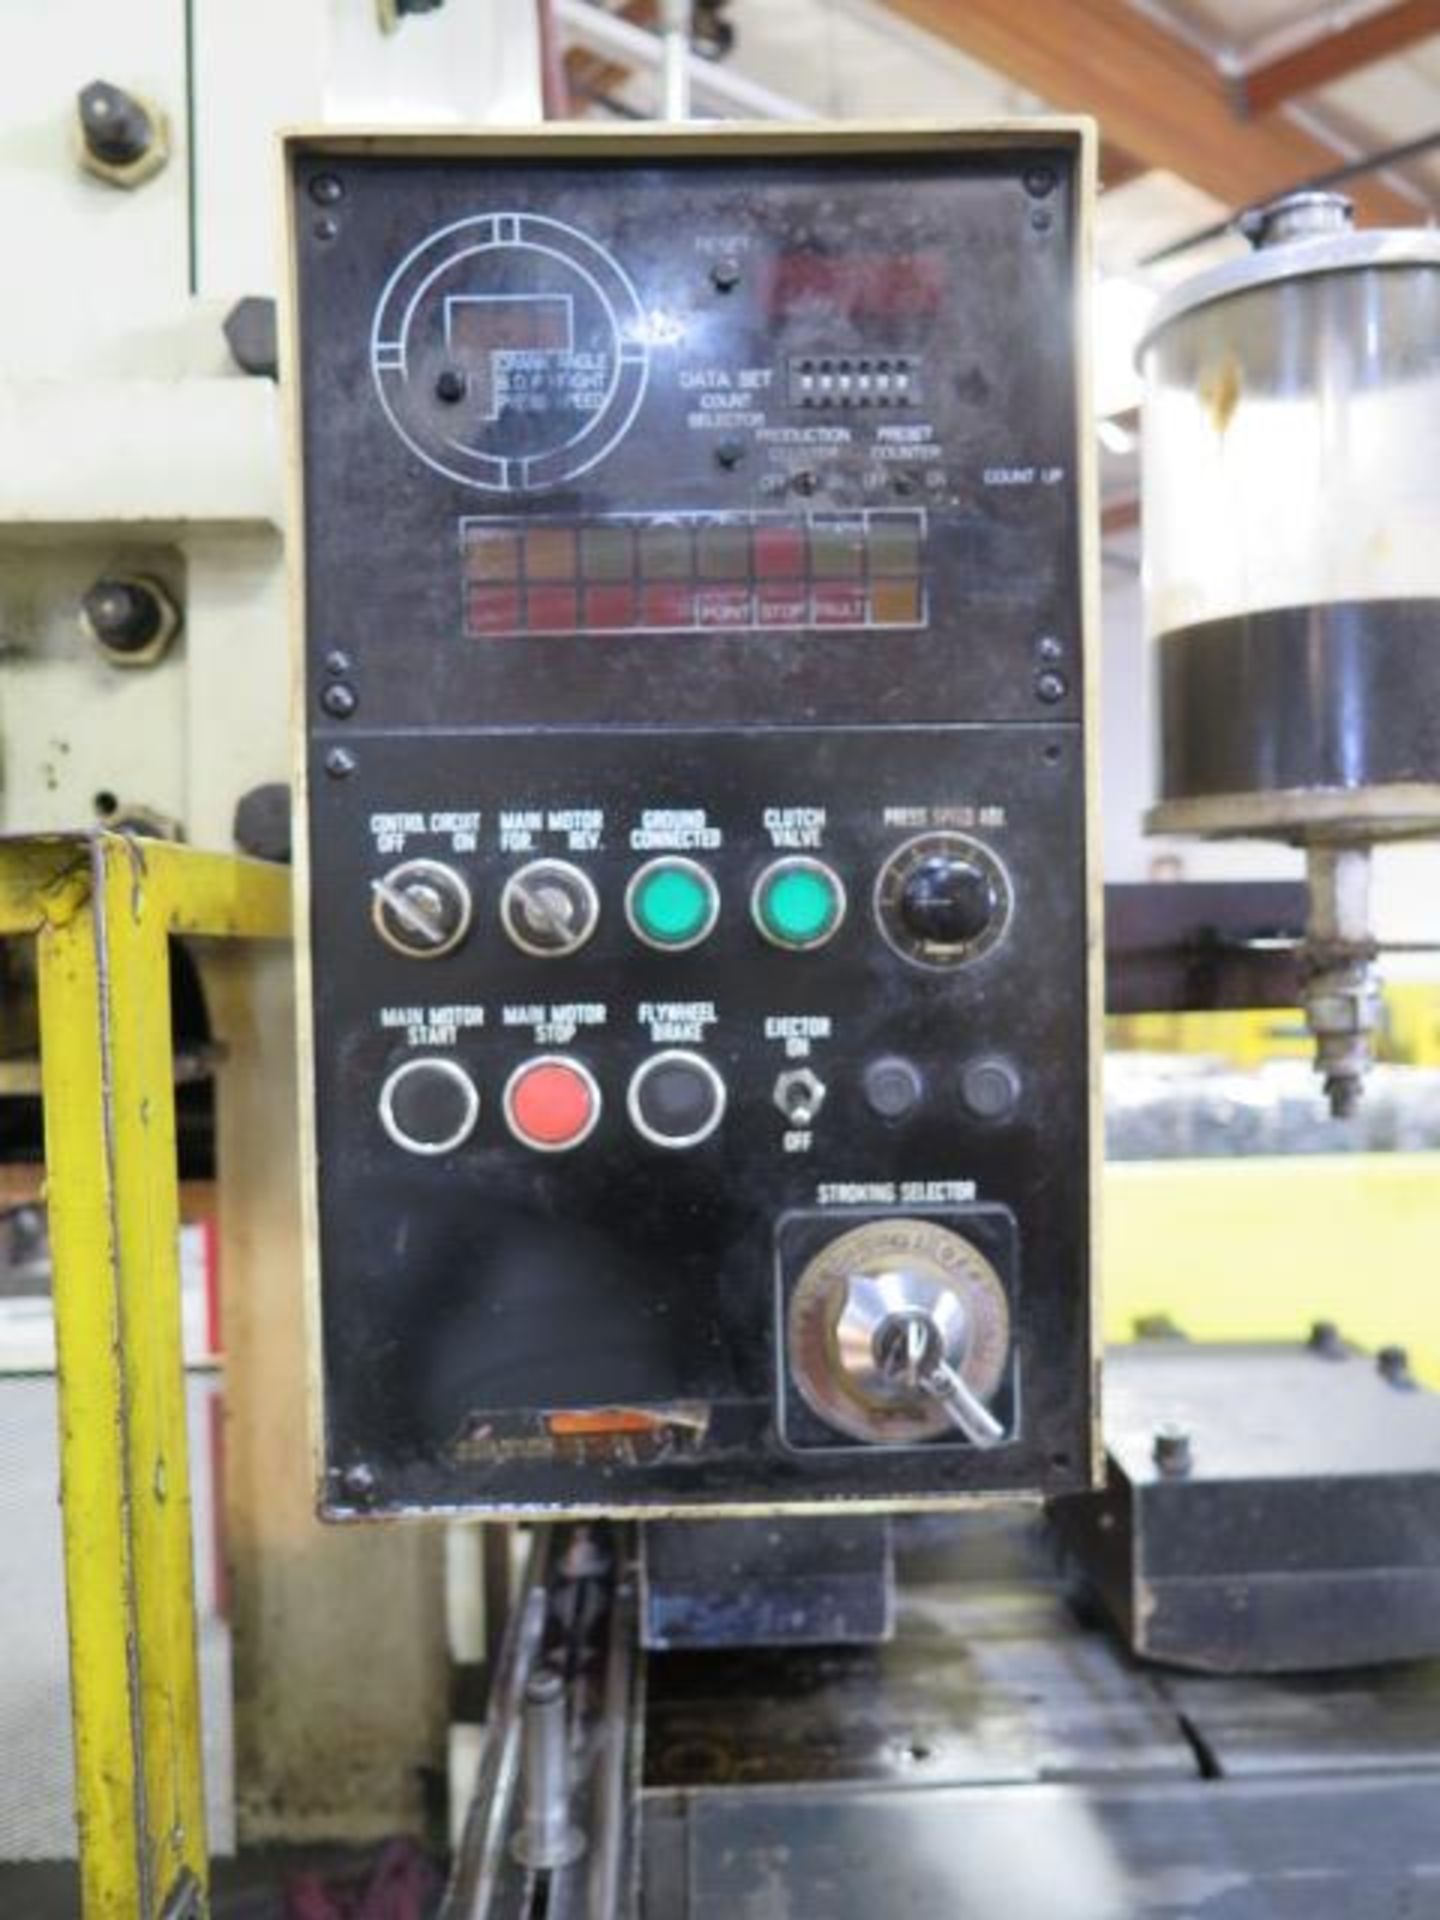 Komatsu OBS 150-3 150 Ton Gap Frame Press s/n 11140 w/ Controls, 27-55 SPM, 7.89” Stroke, SOLD AS IS - Image 12 of 23